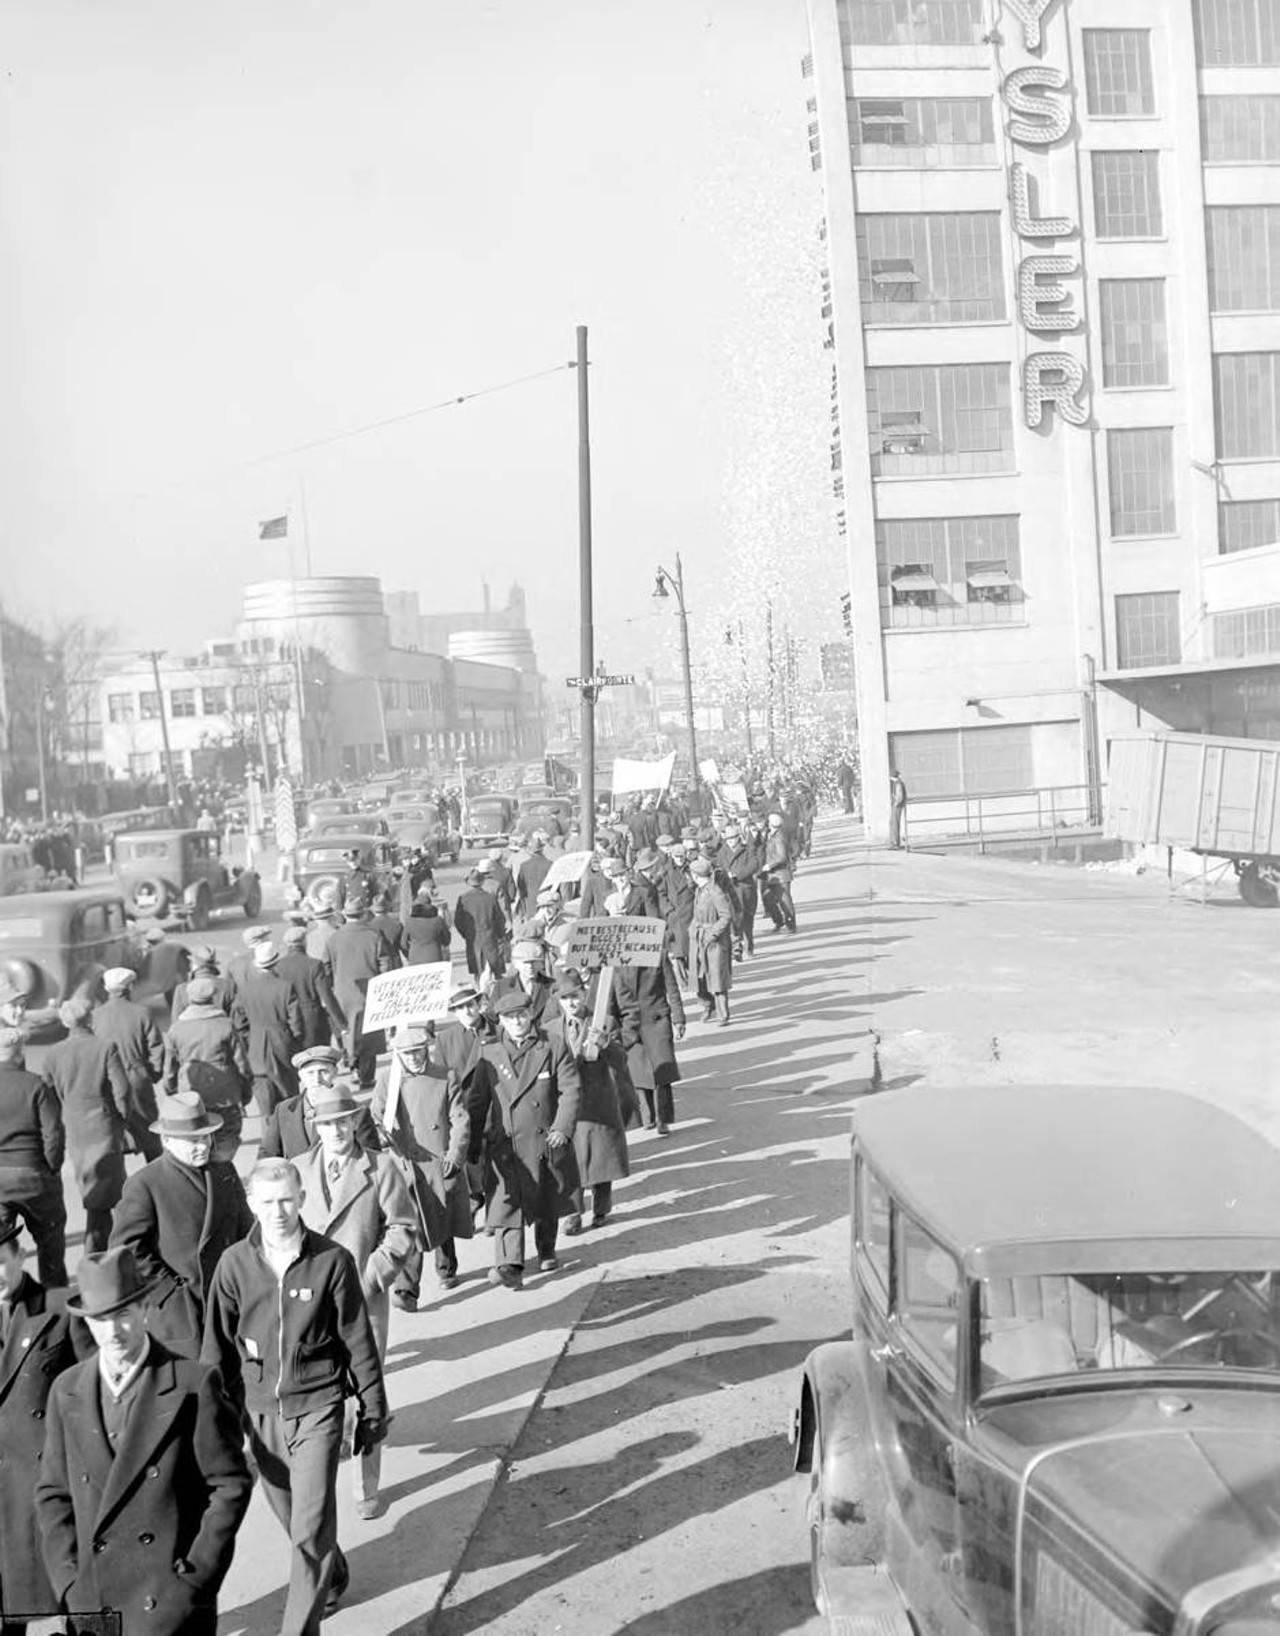 
March 17, 1937: Striking auto workers walk a picket line near the Chrysler plant on Jefferson Avenue in Detroit.